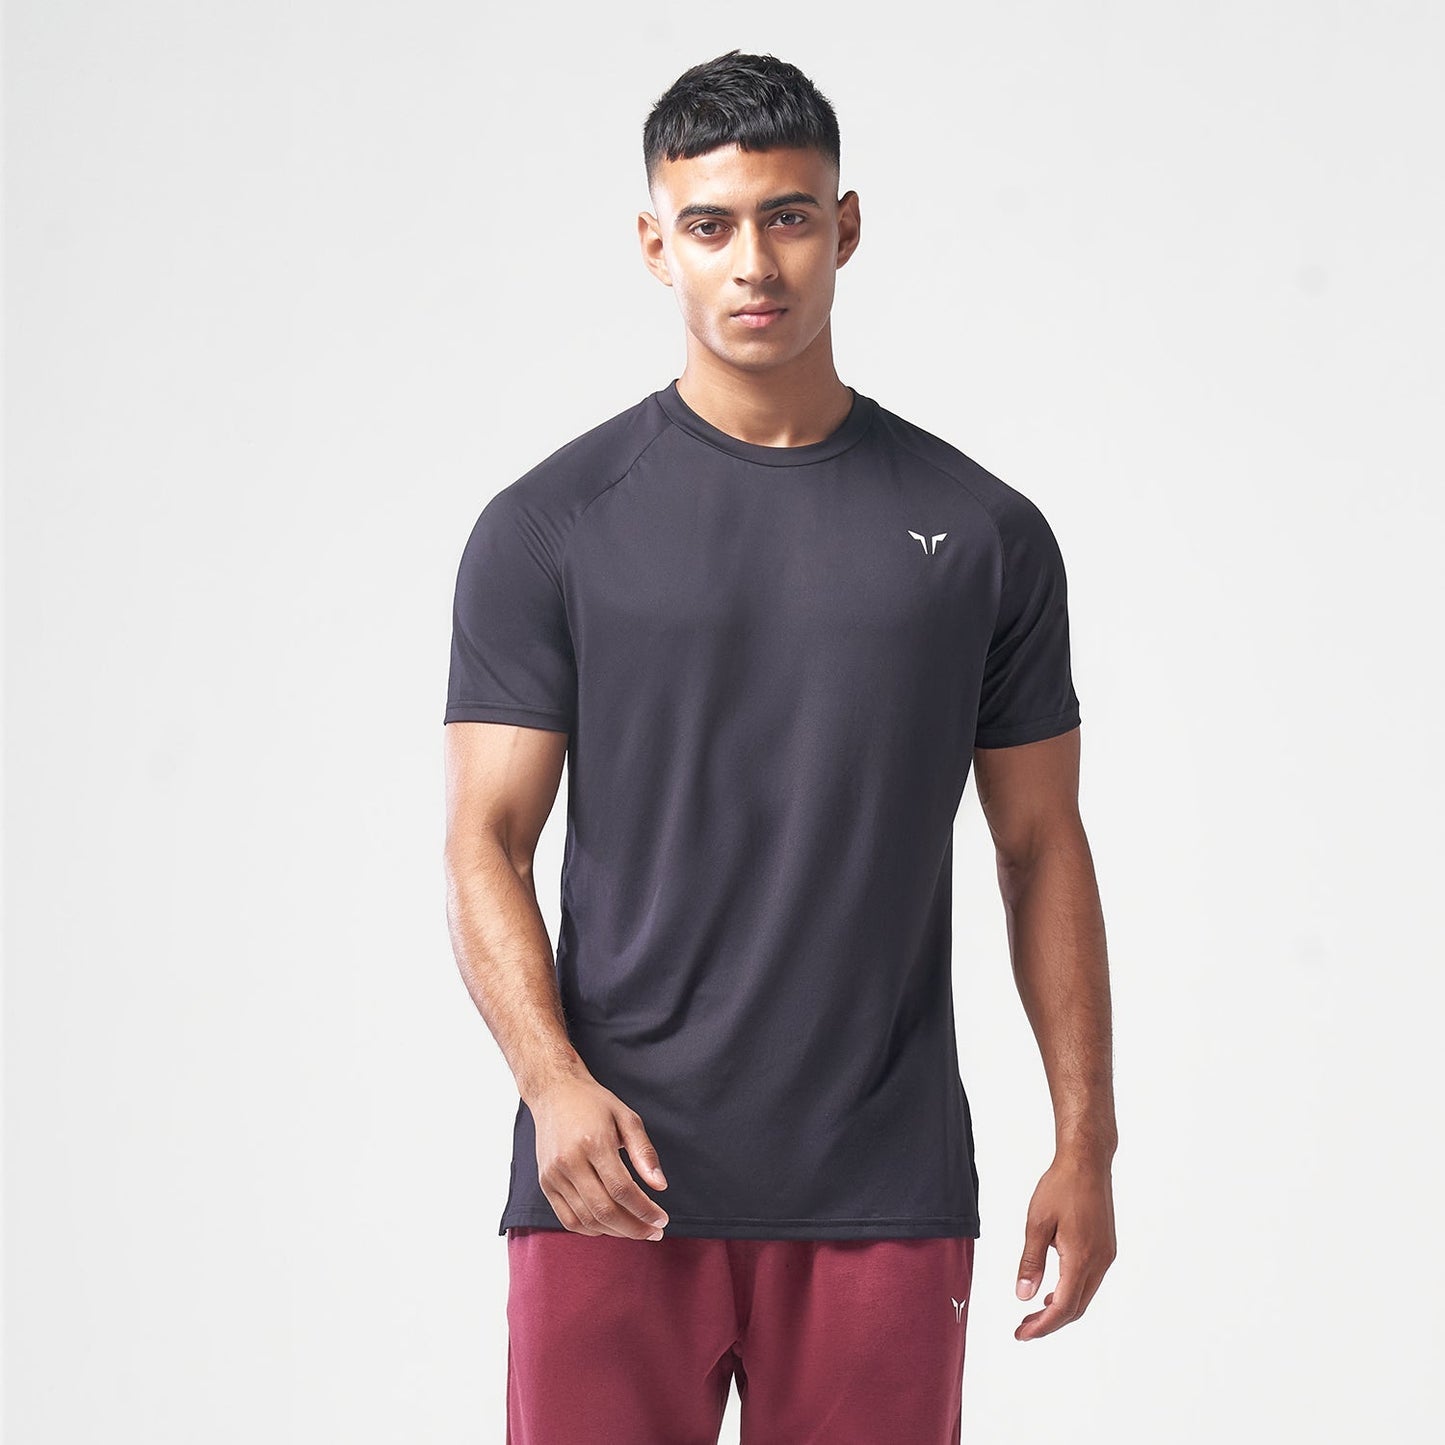 squatwolf-gym-wear-essential-tee-bundle-1-workout-shirts-for-men